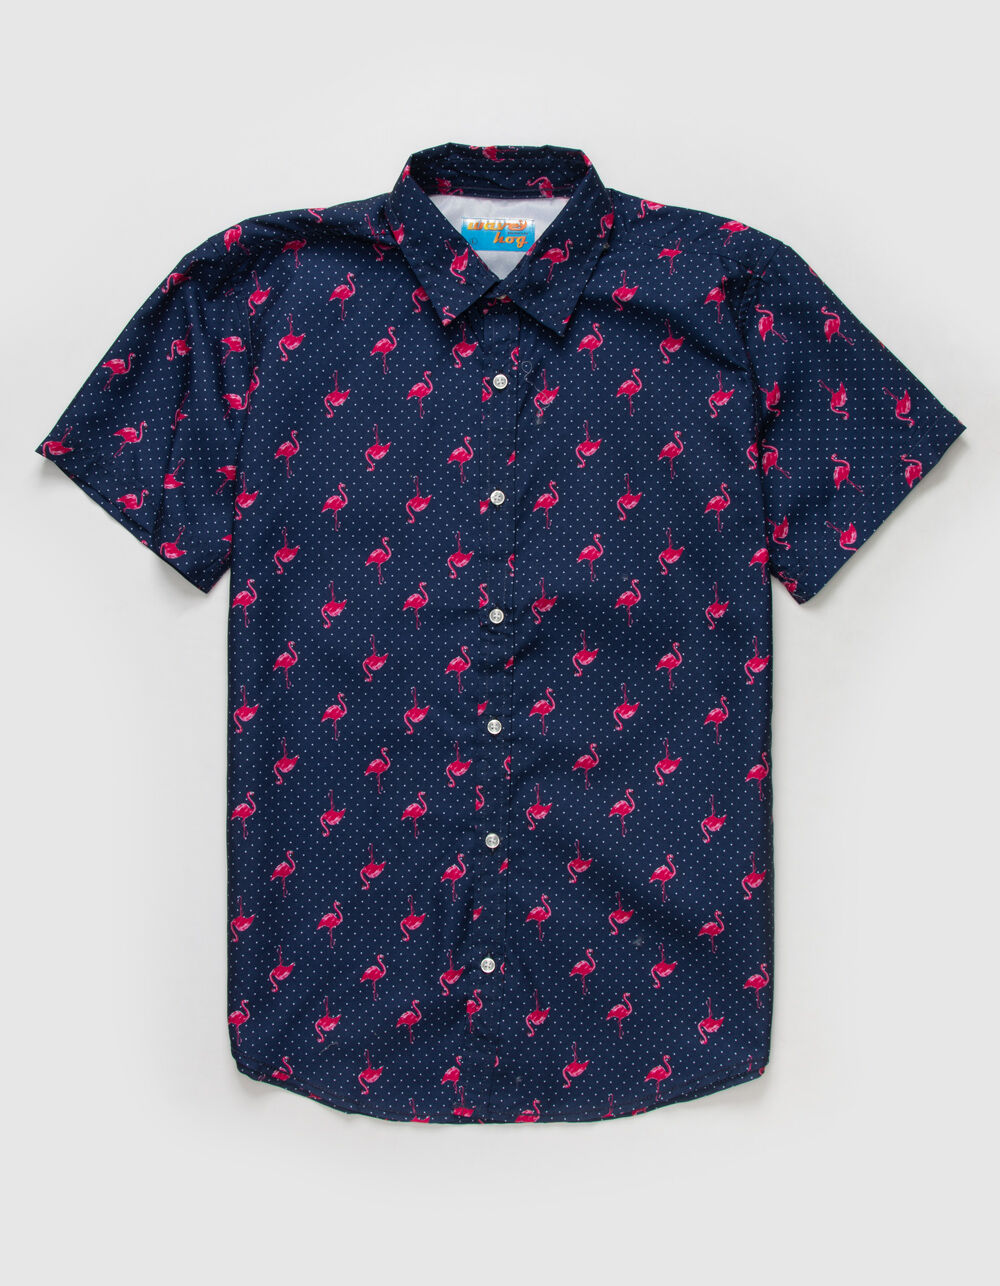 WAVE HOG Flamingo Dot Boys Shirt - NAVY | Tillys